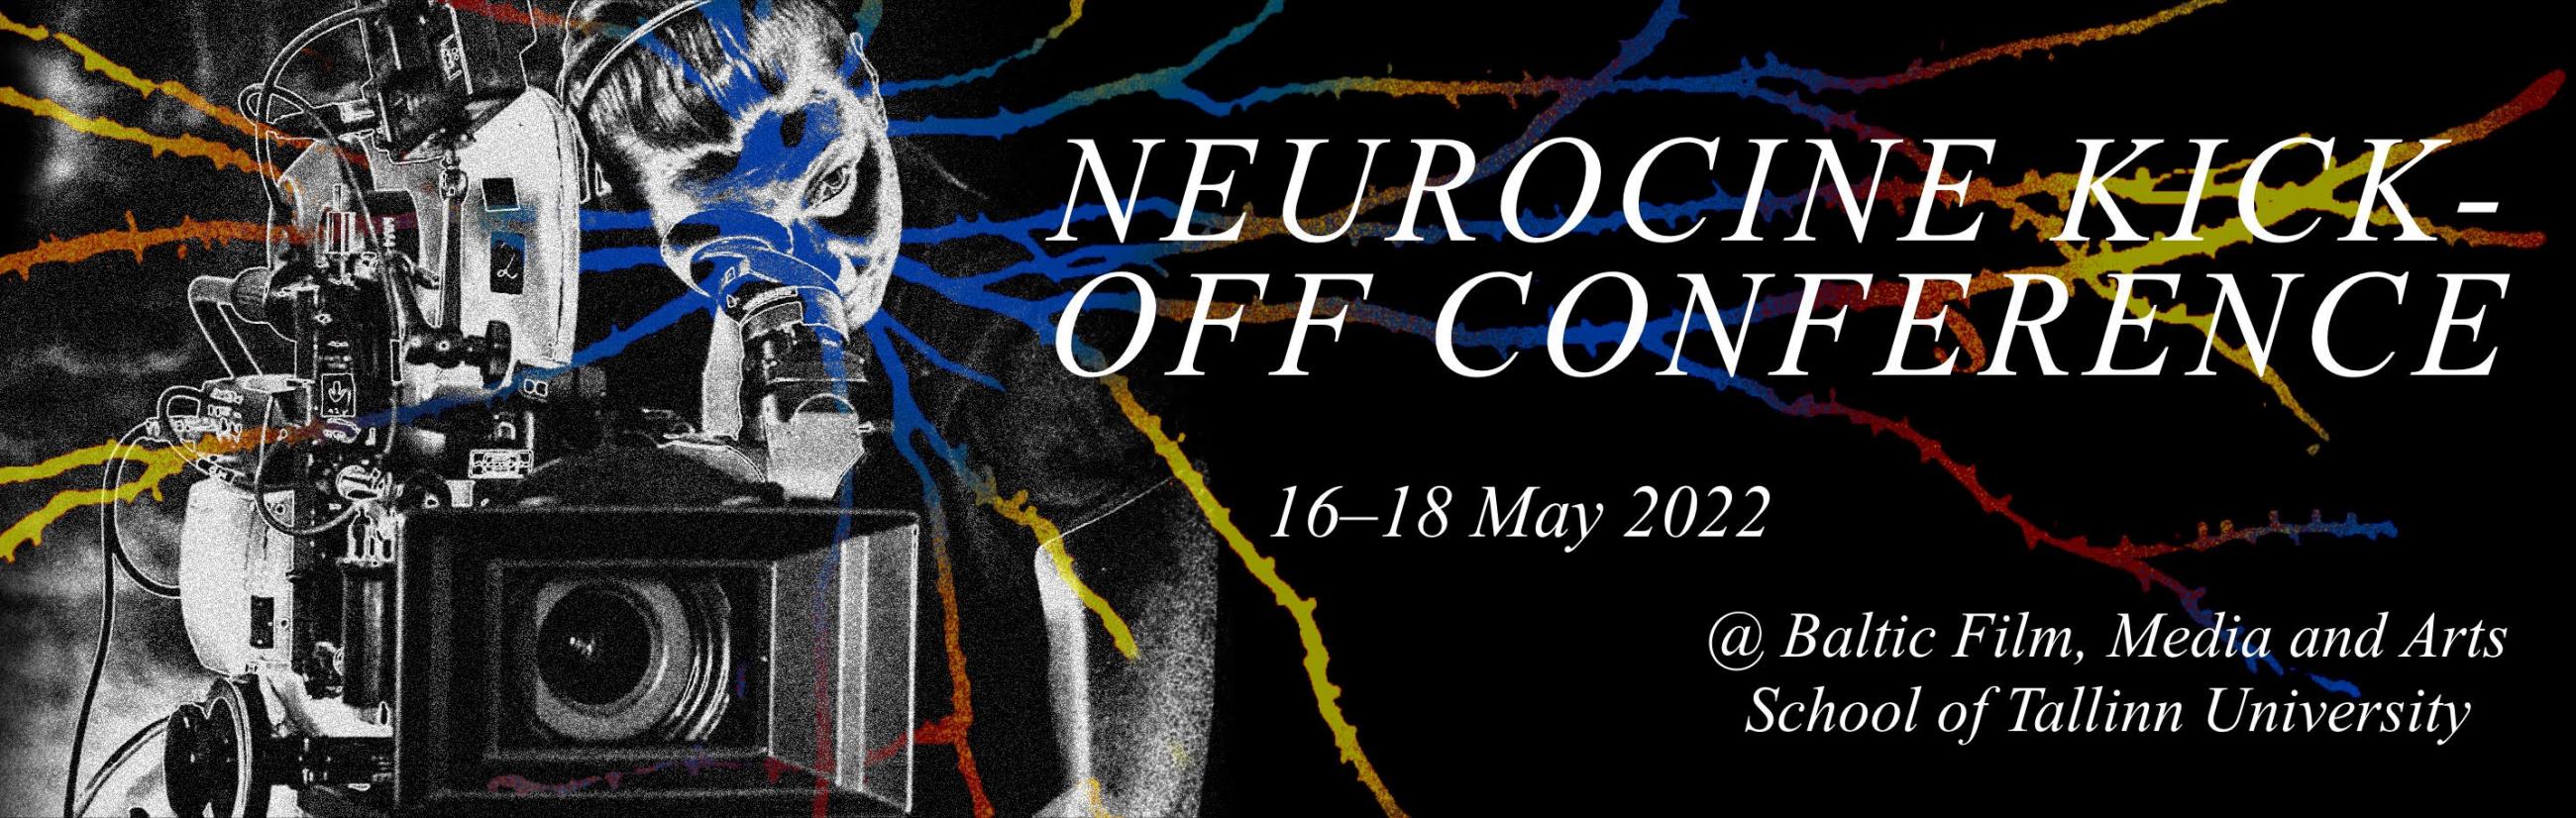 Neurocinema conference